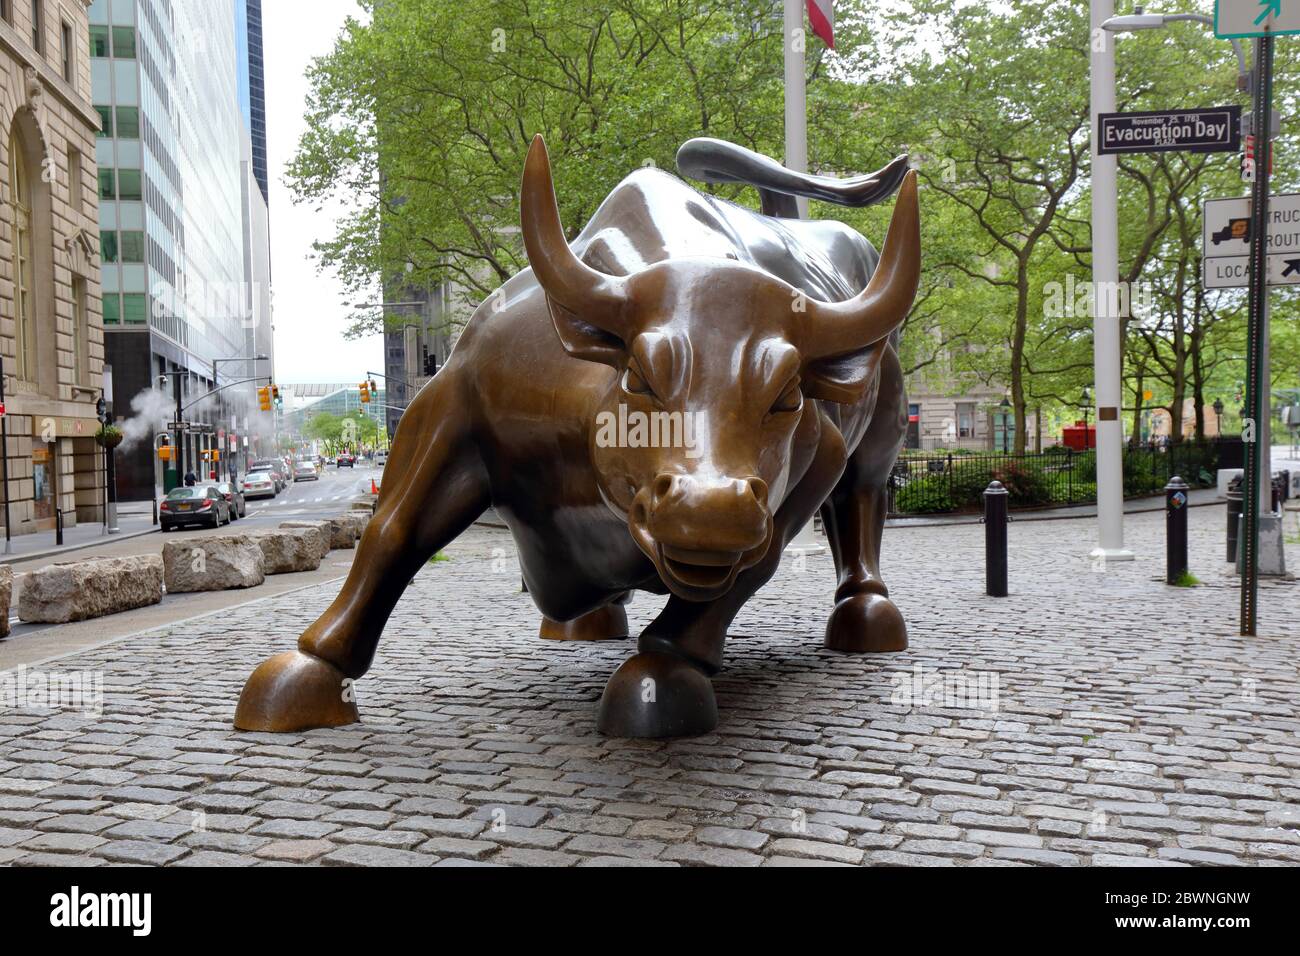 Ricarica Bull di Arturo di Modica. Una scultura in bronzo che è venuta a rappresentare Wall Street, situata a Bowling Green, Manhattan, New York. Nessuna gente Foto Stock